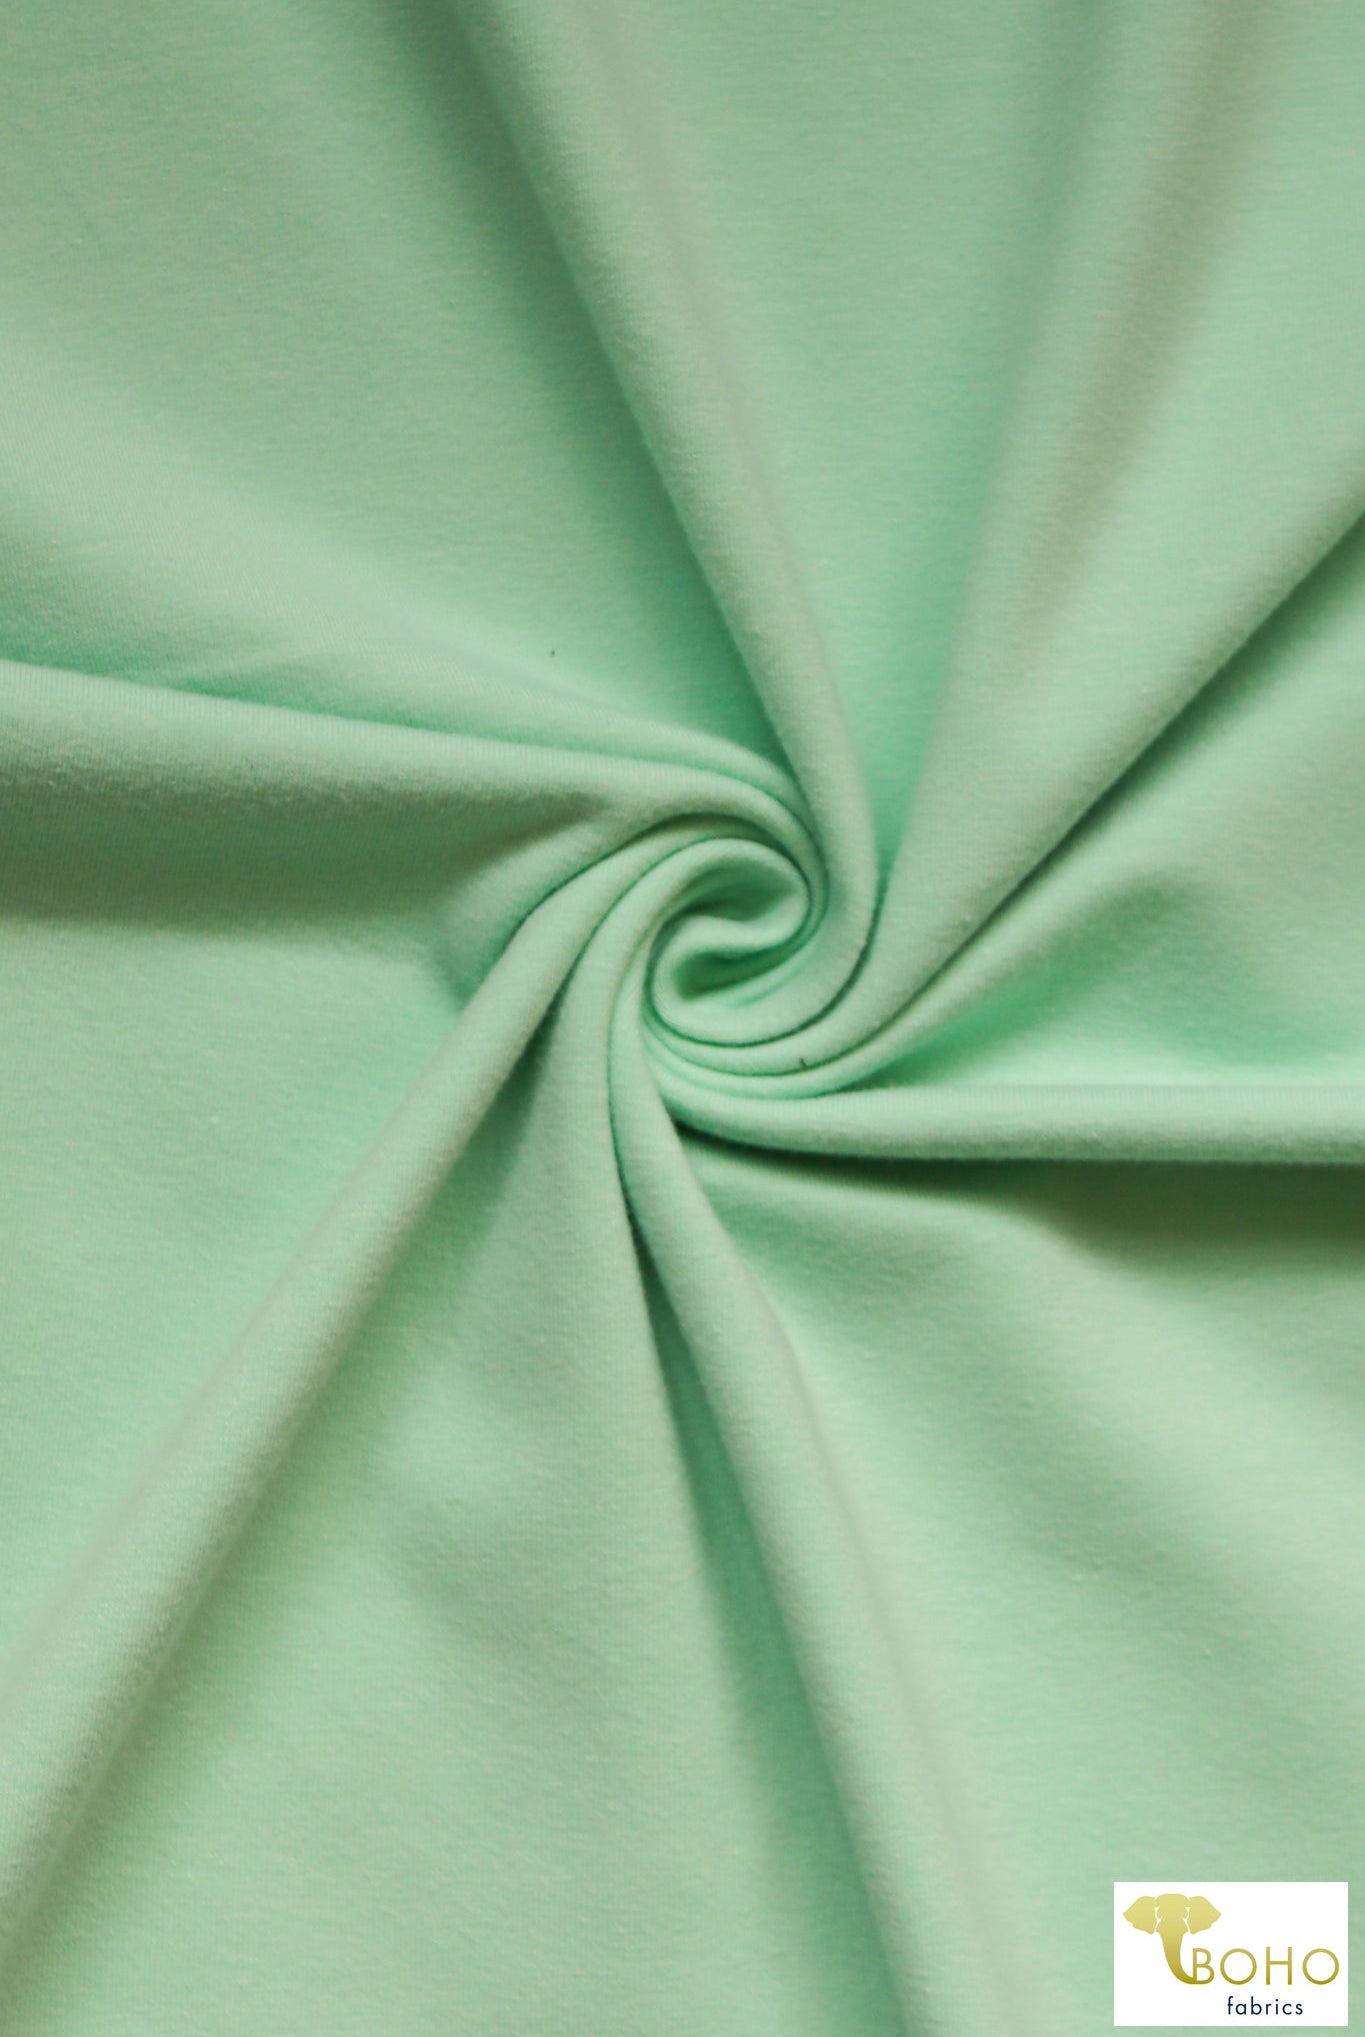 Mint Green, Cotton Spandex Knit, 10 oz. - Boho Fabrics